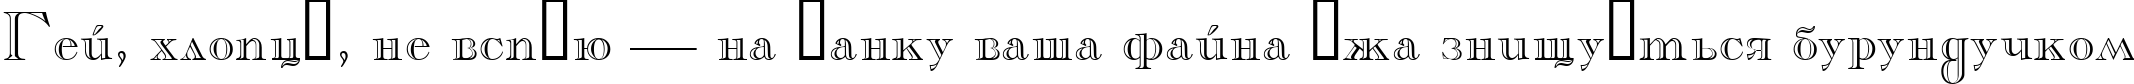 Пример написания шрифтом Casper текста на украинском